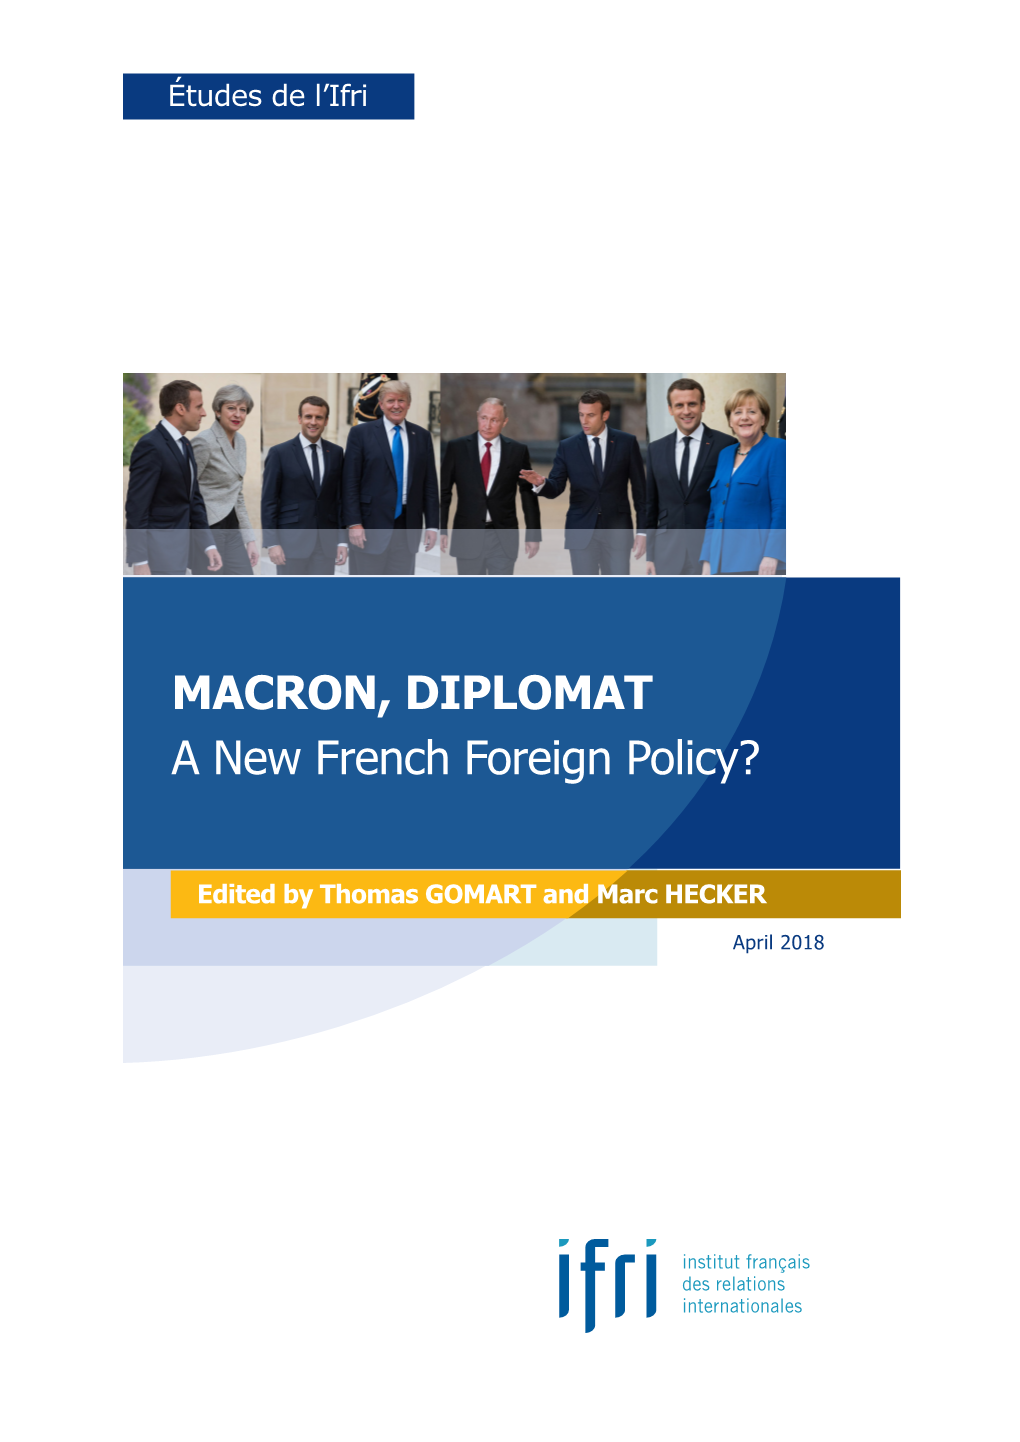 Macron, Diplomat: a New French Foreign Policy?”, Études De L’Ifri, Ifri, April 2018